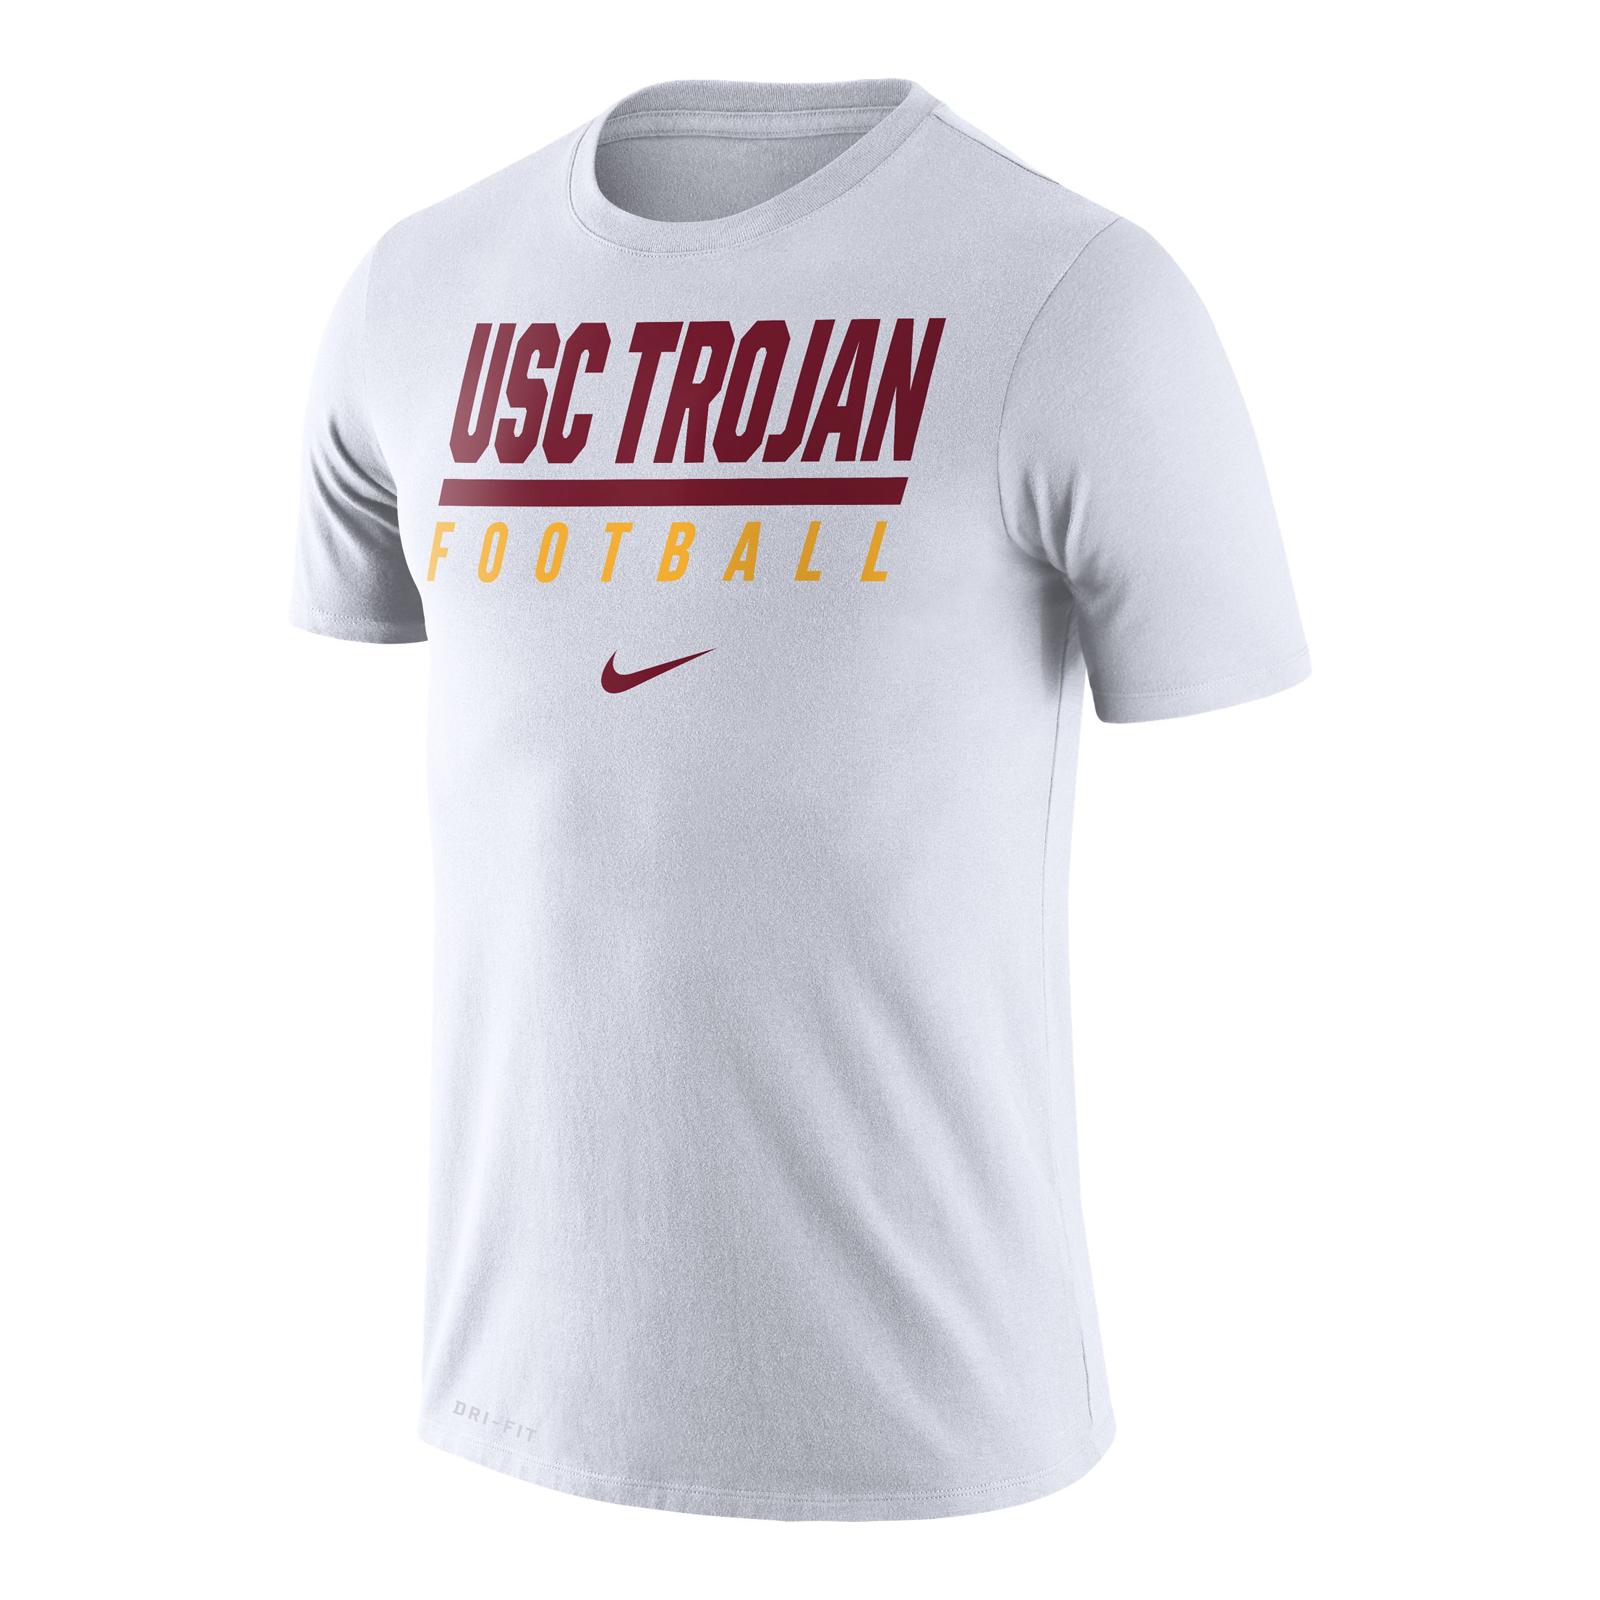 NCAA USC Trojans University of Southern California Undisputed T-Shirt Large Gray/Black 